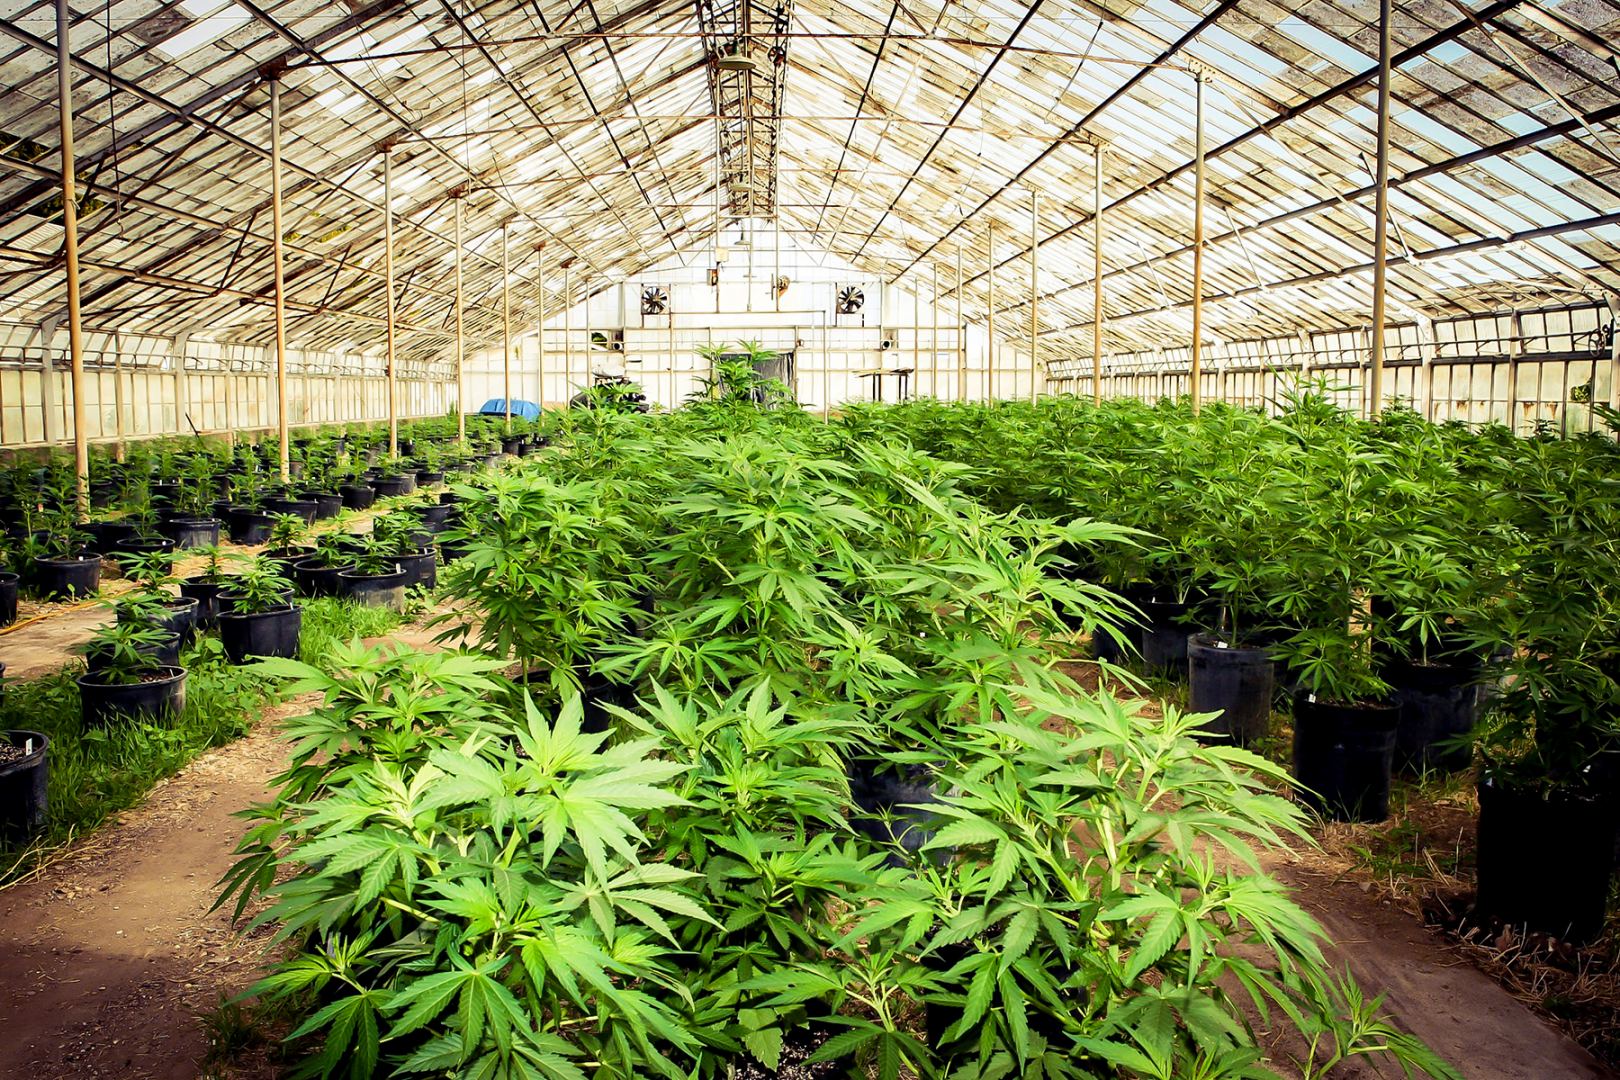 Morocco seizes 1 tonne of cannabis